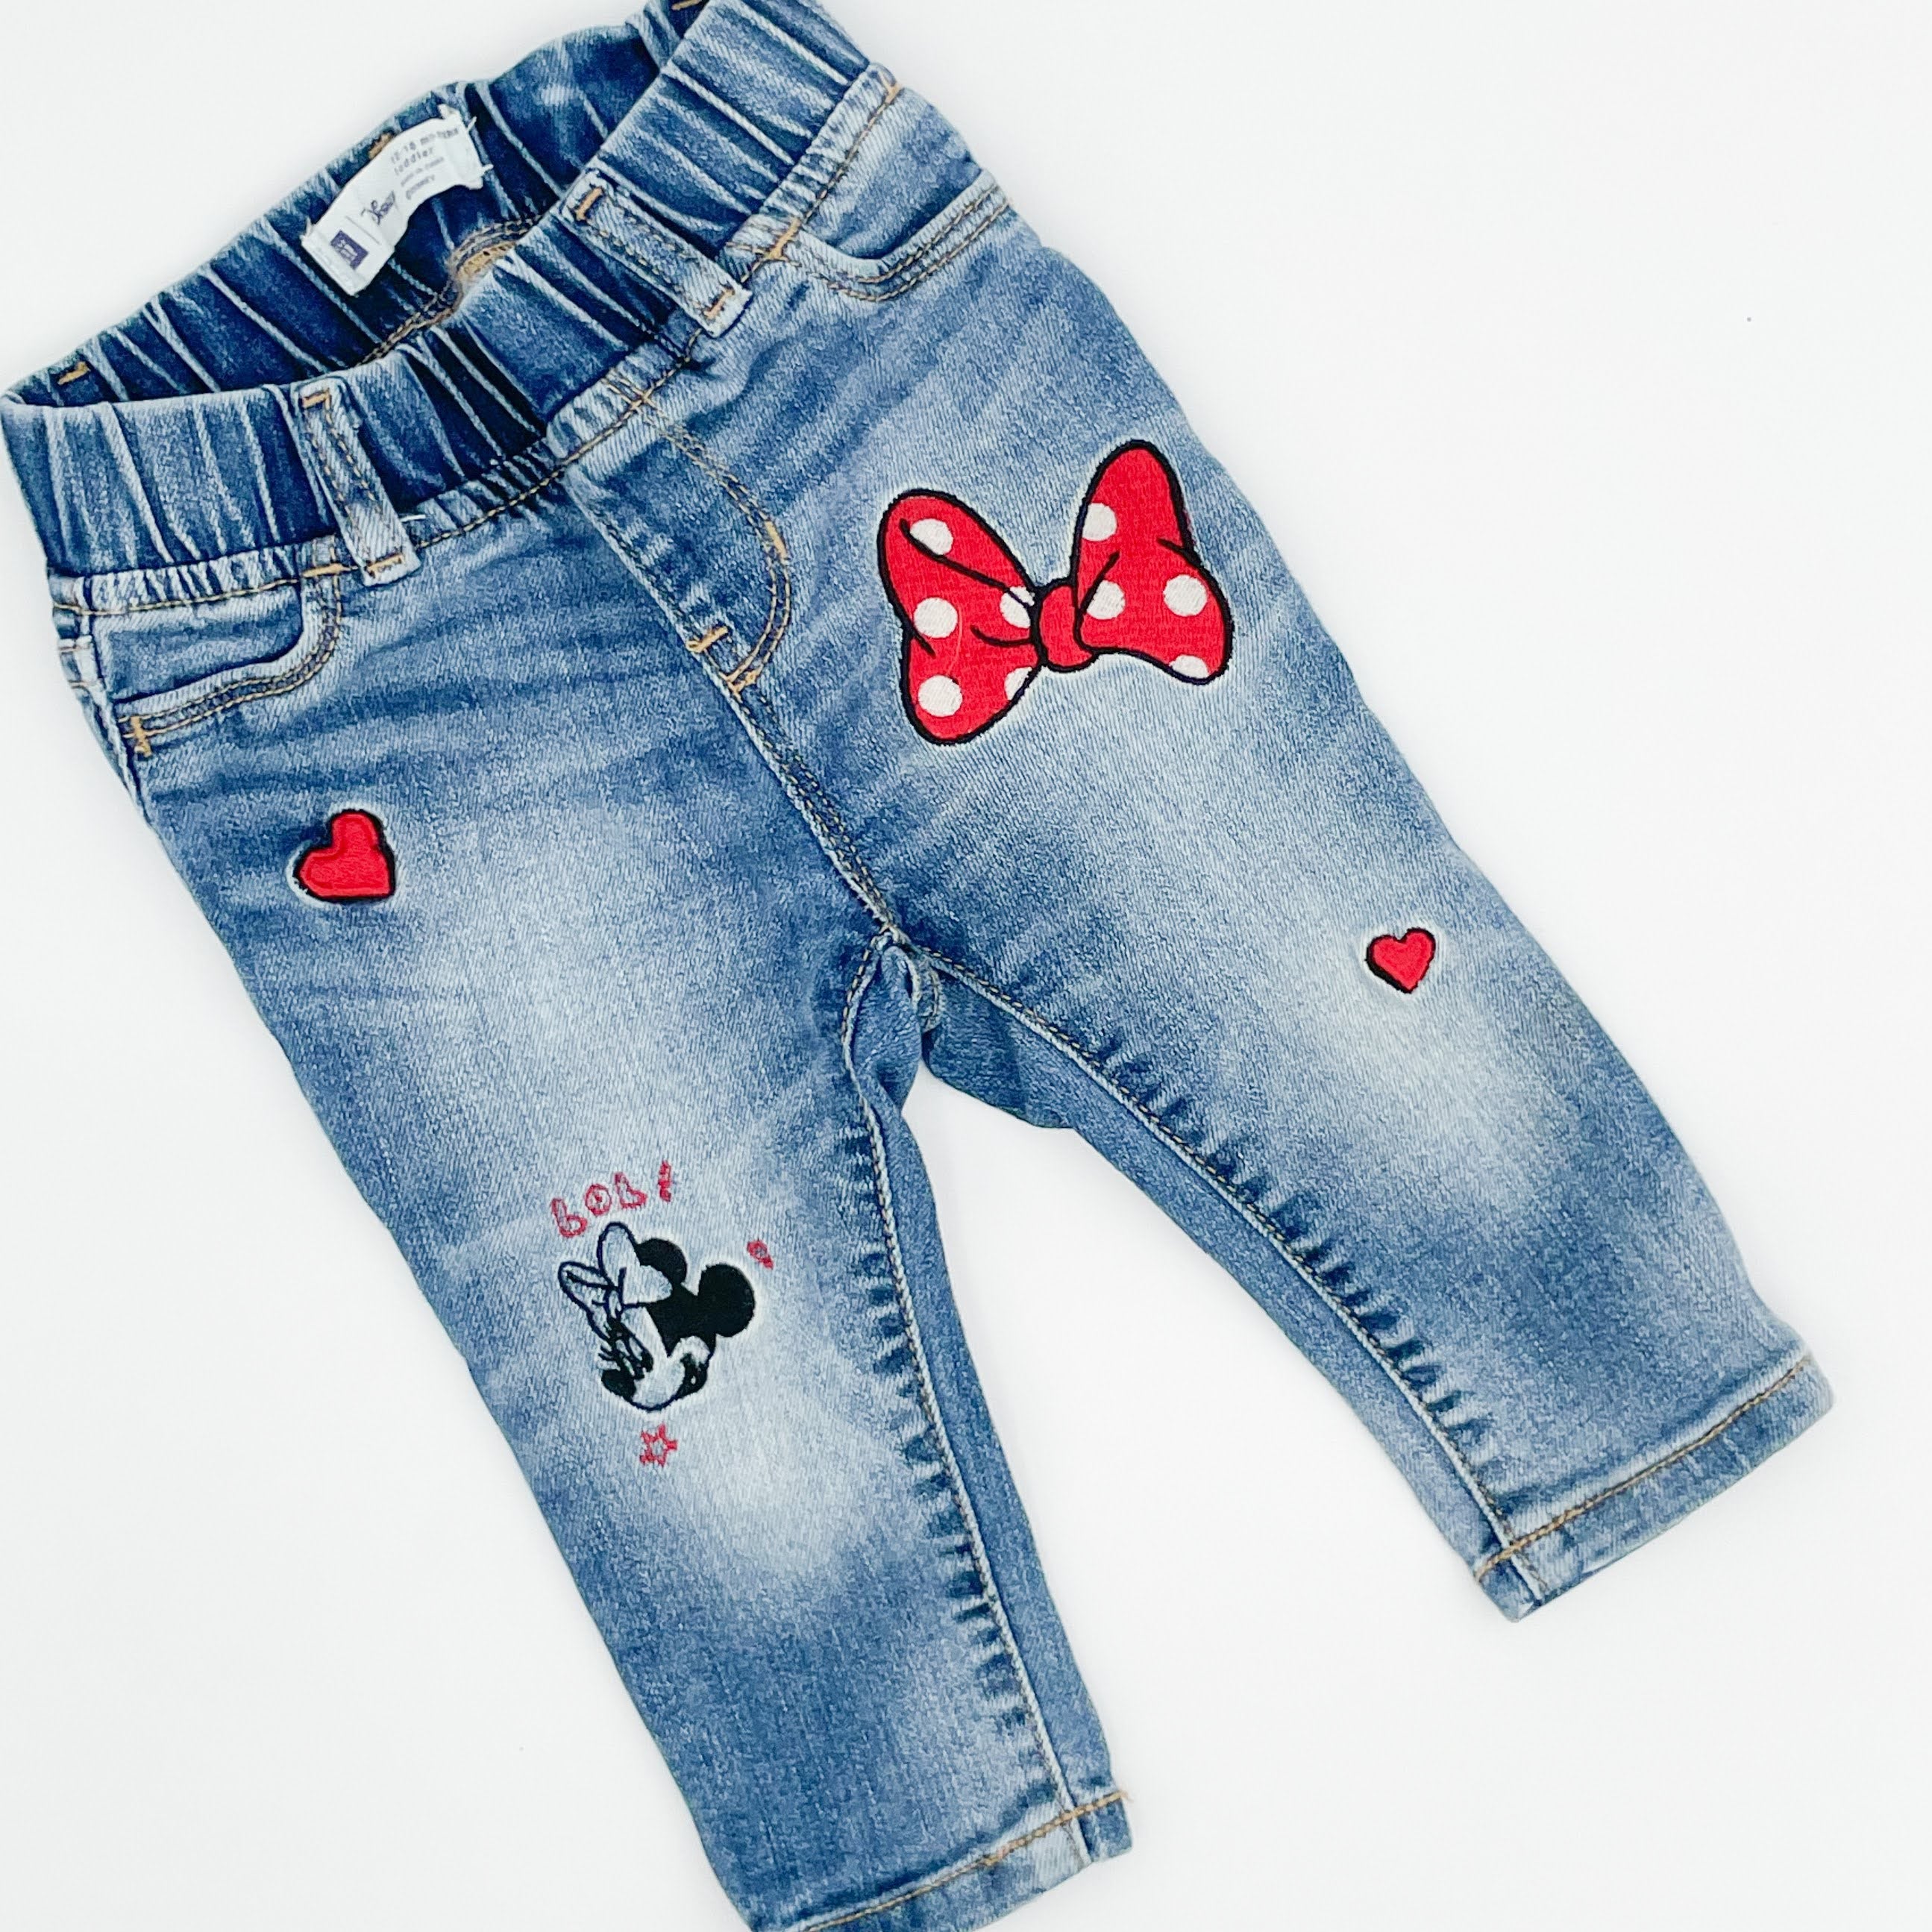 Jeans Patched Minnie - Gap Disney